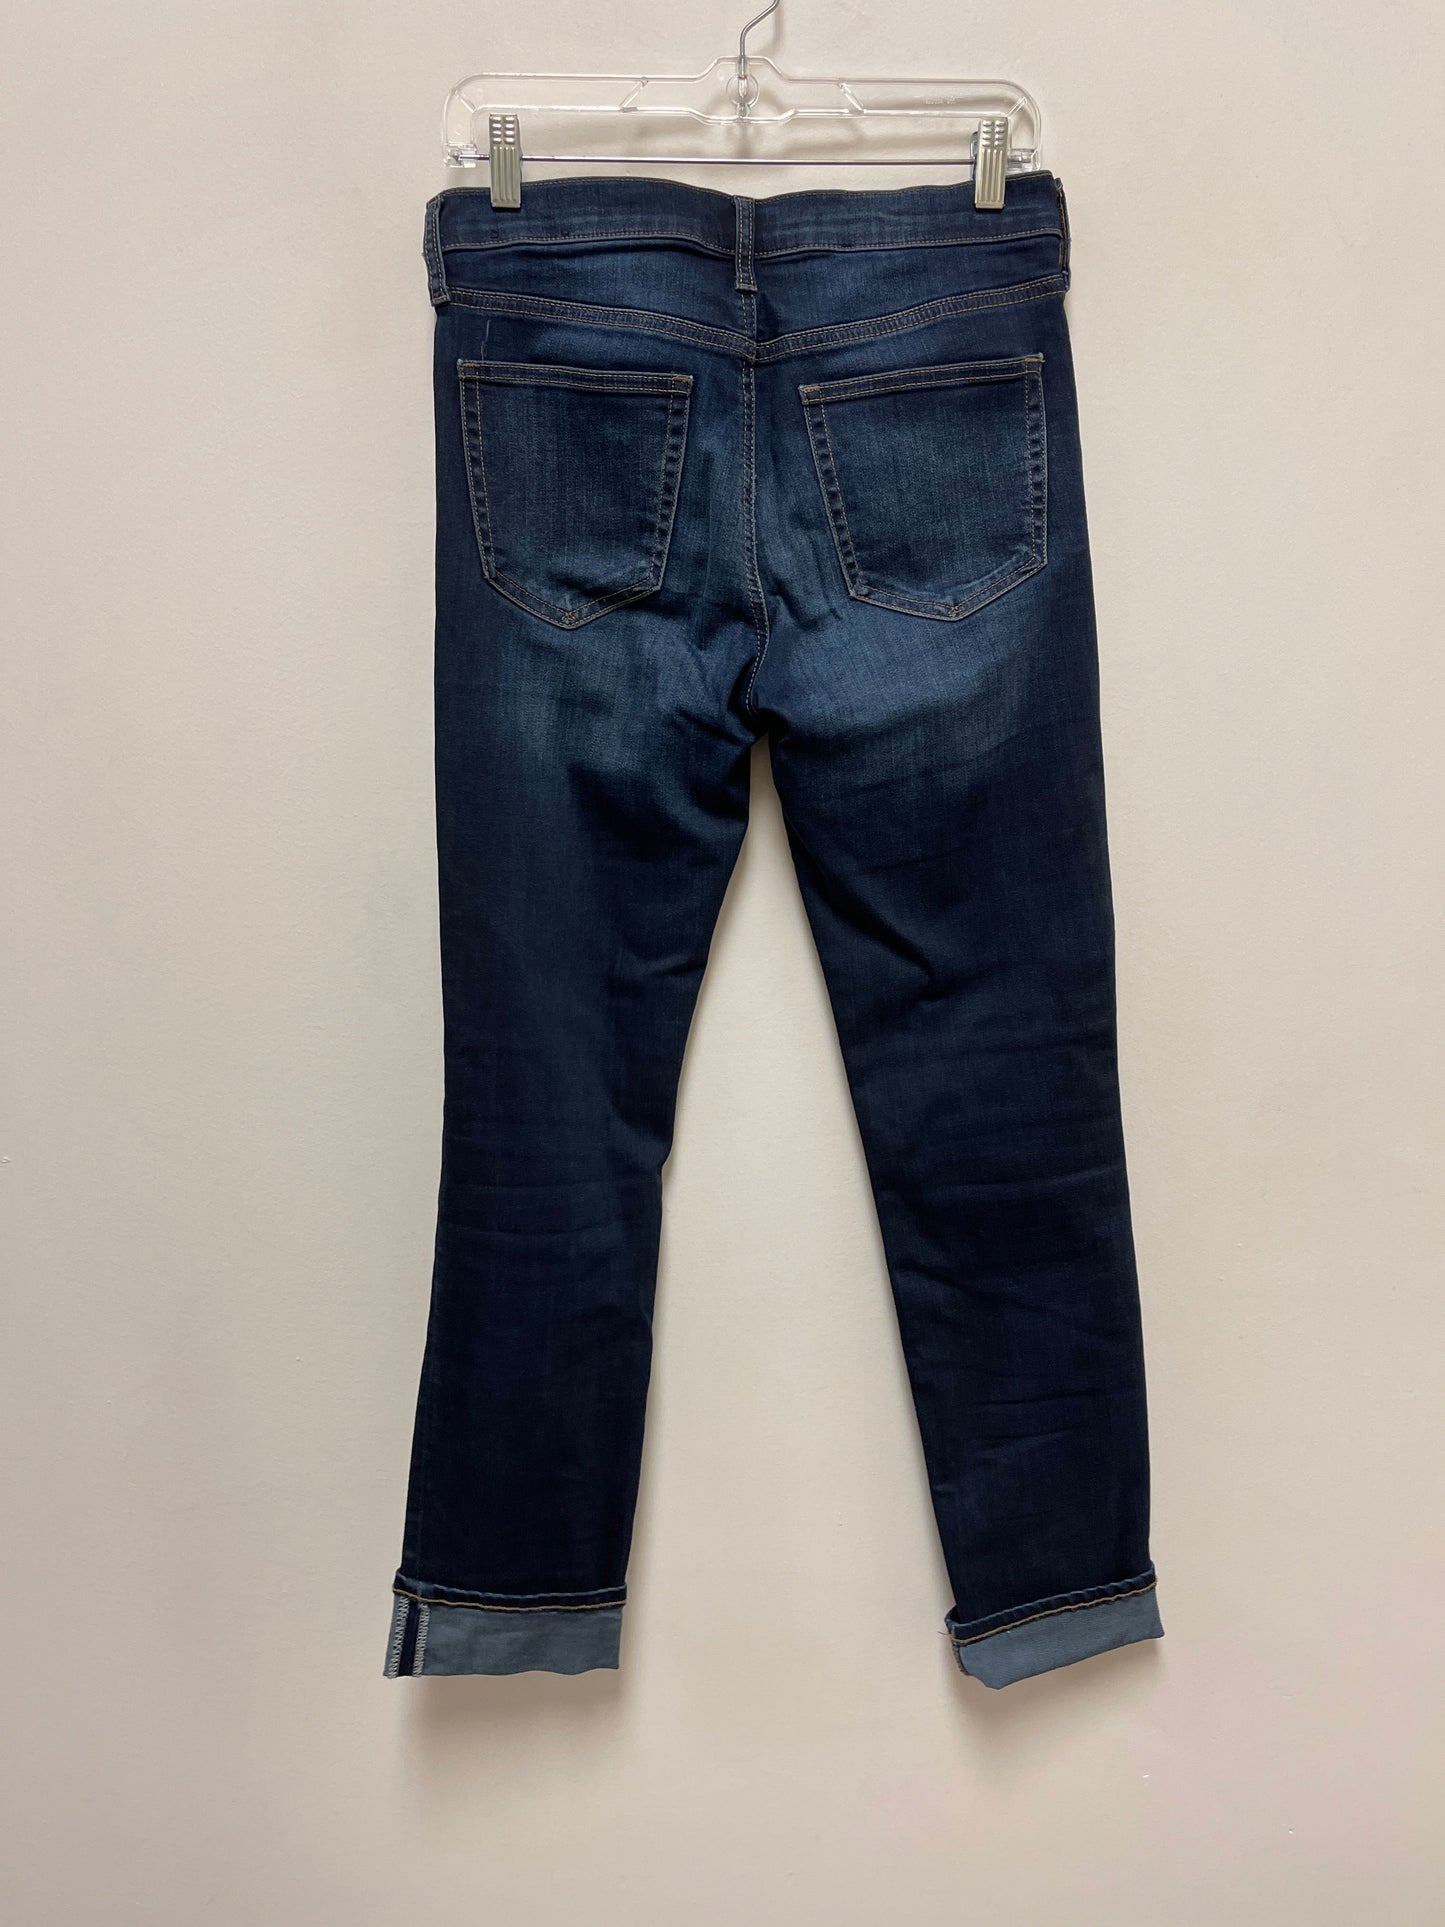 Blue Denim Jeans Straight Gap, Size 6